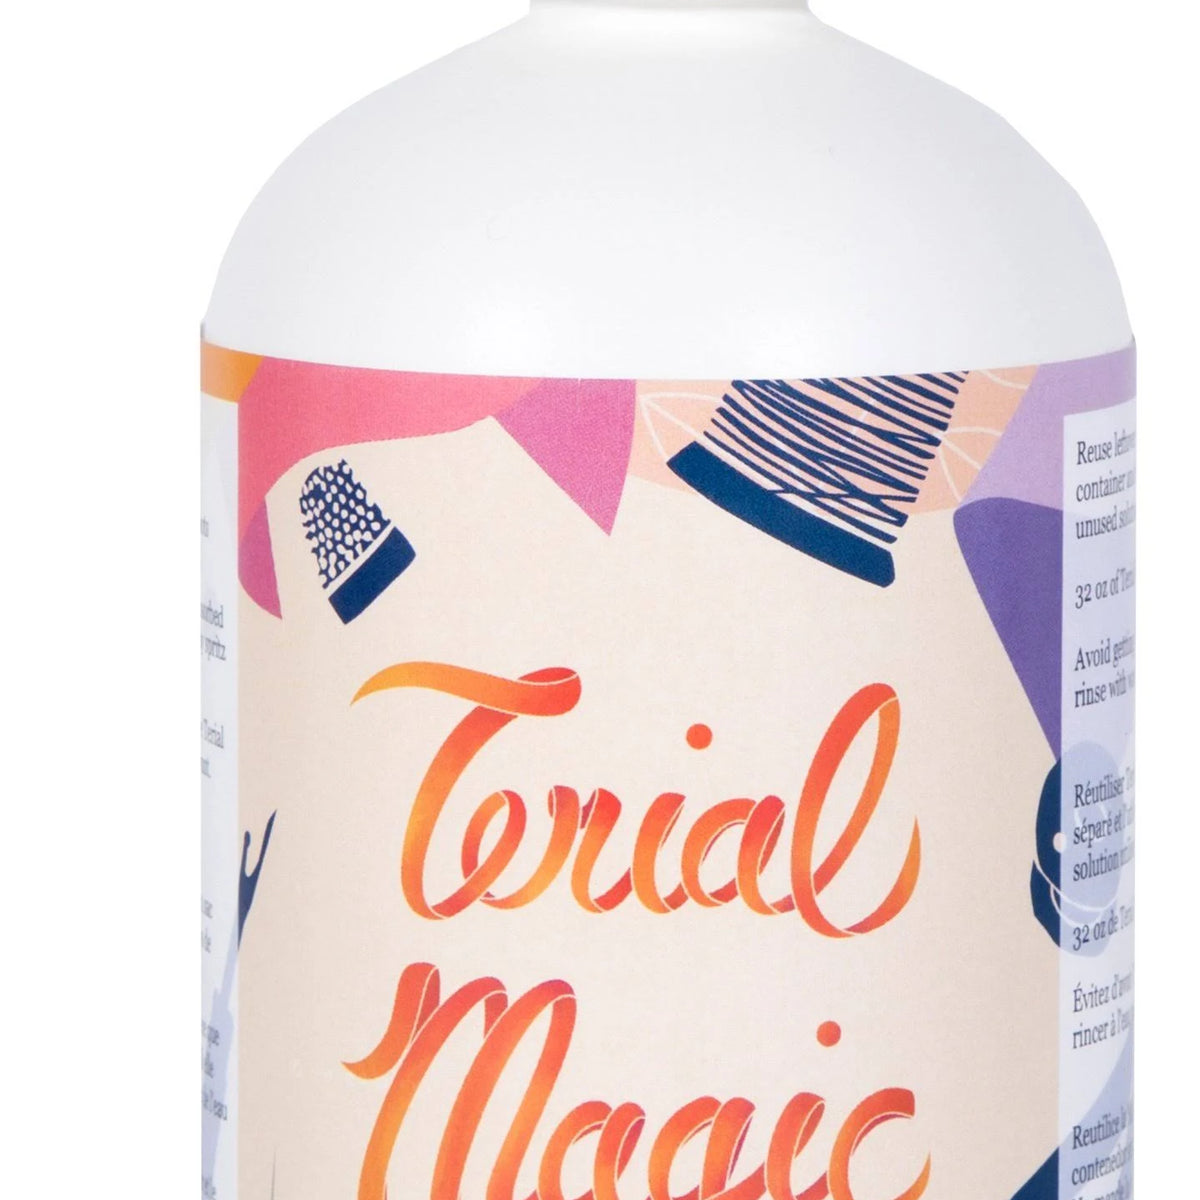 Terial Magic 32 oz Refill